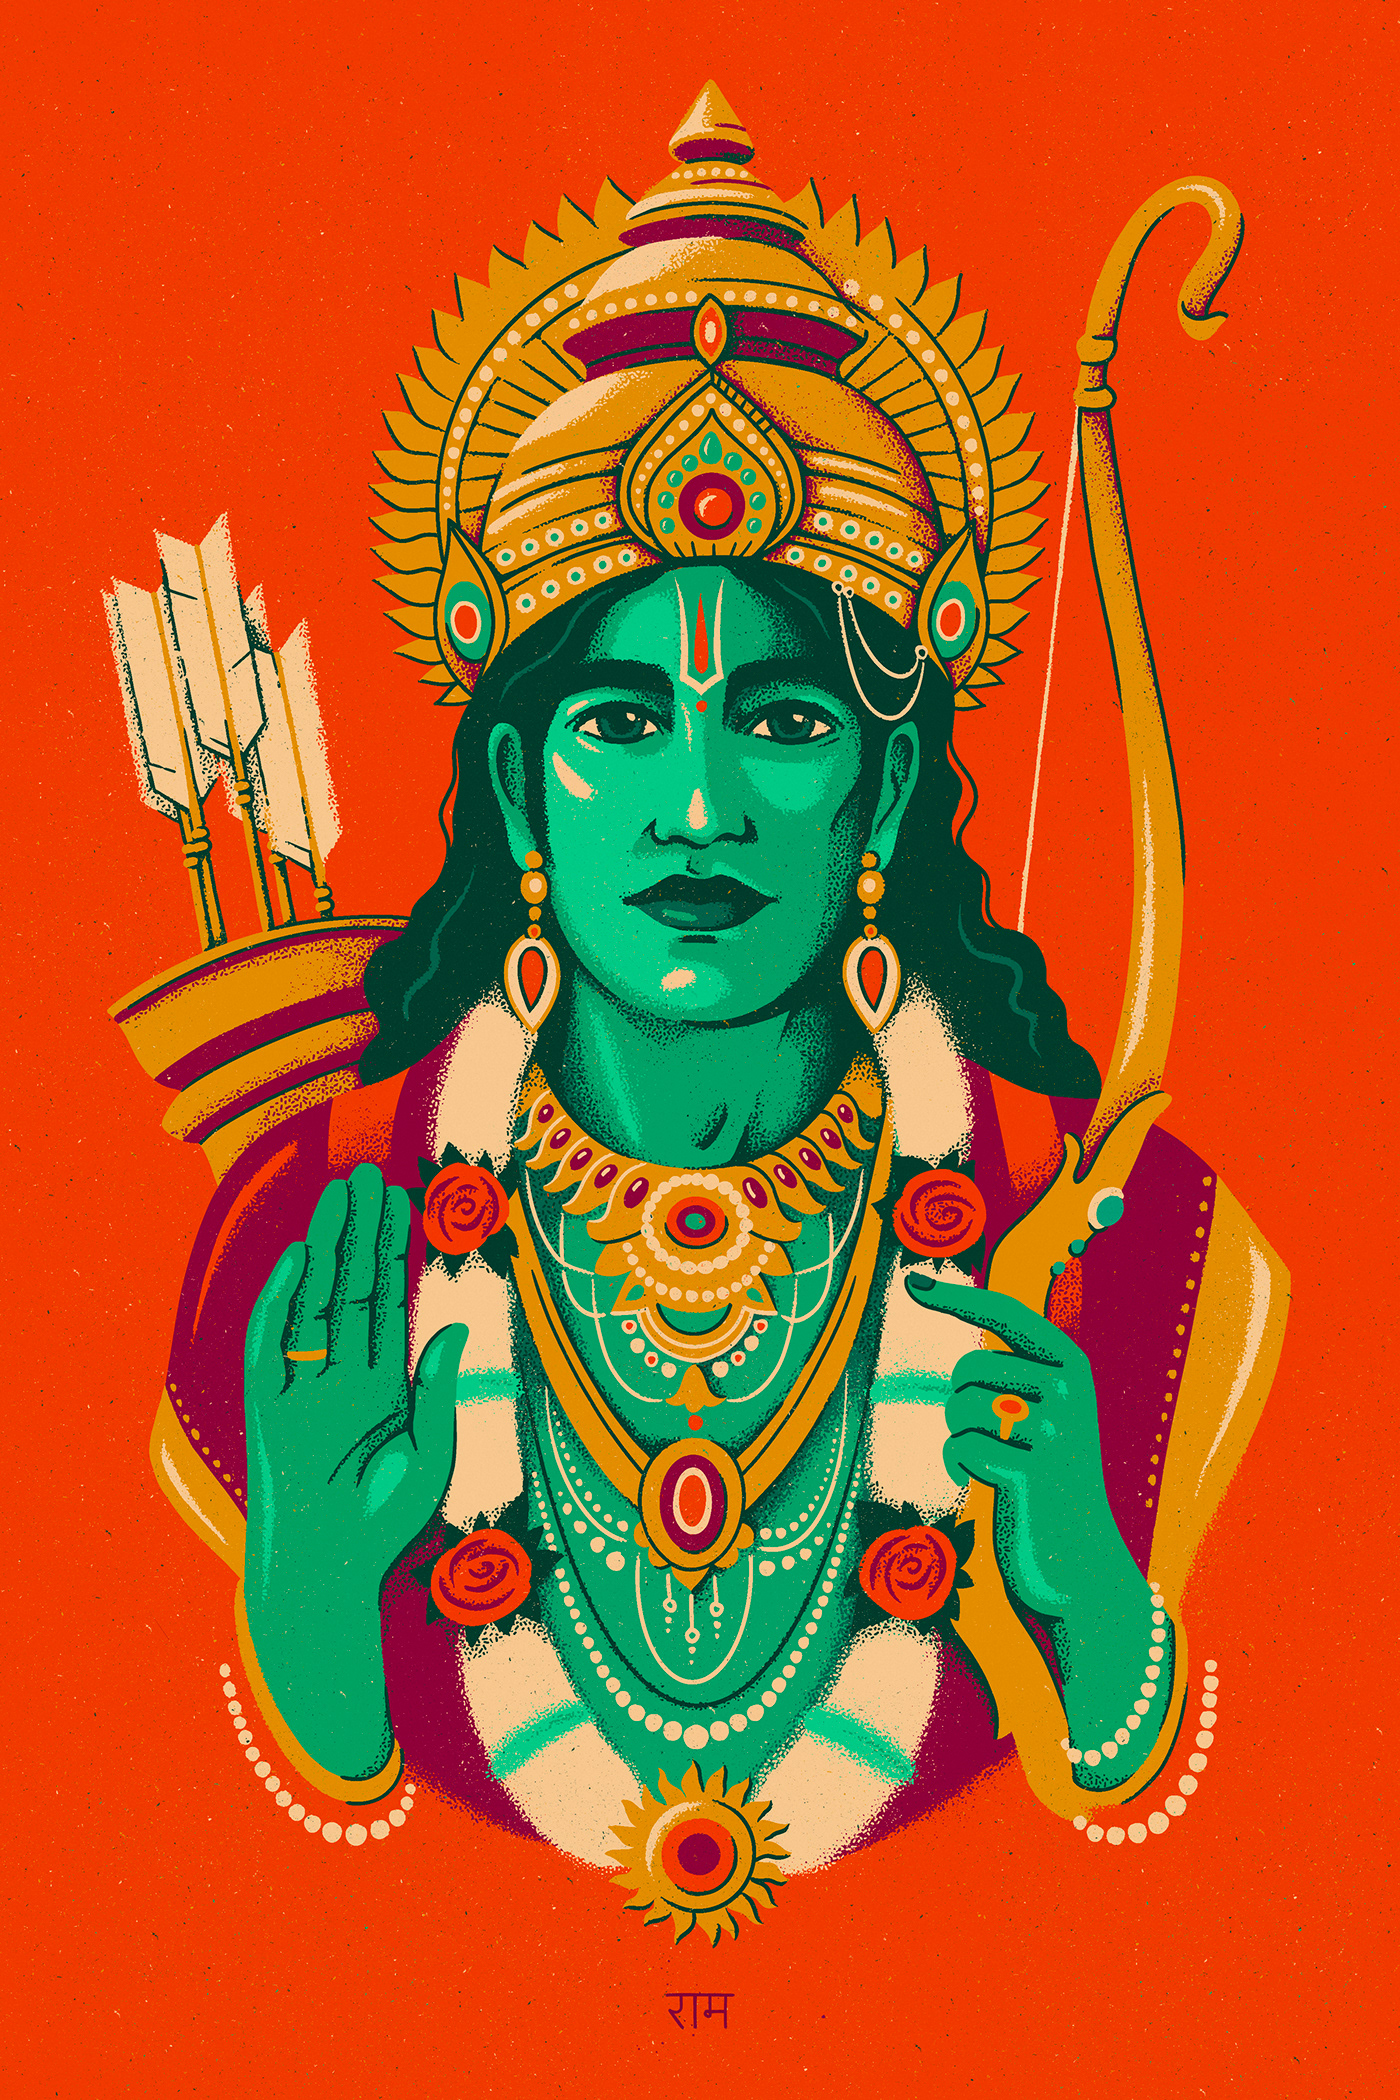 Book cover illustration of god Rama, Ramayana Indian Epic's main character. 